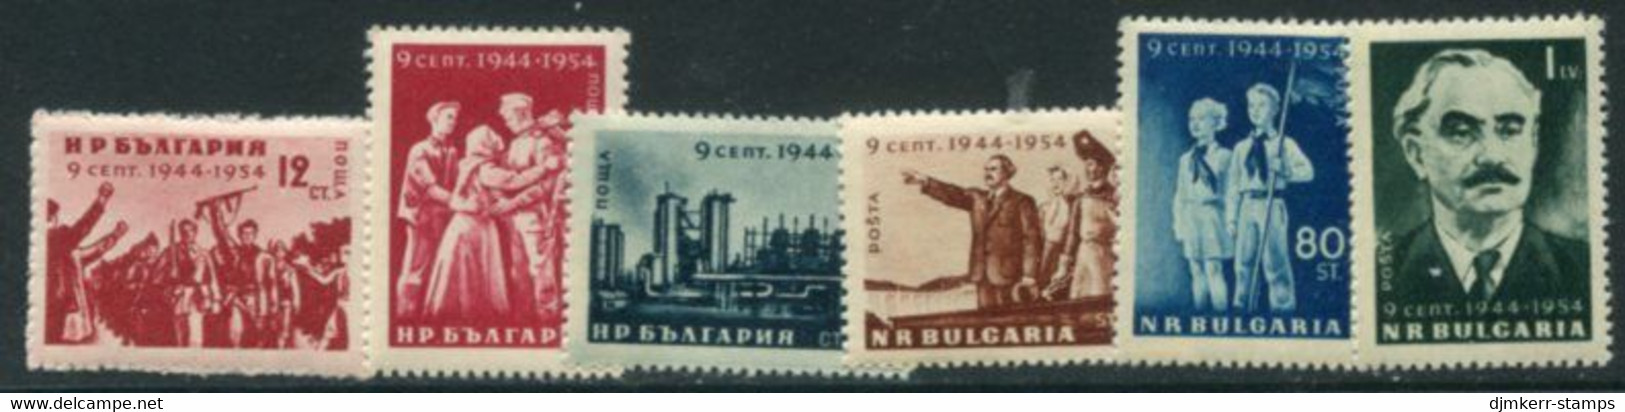 BULGARIA 1954 Liberation Anniversary MNH / ** .  Michel 921-26 - Ungebraucht